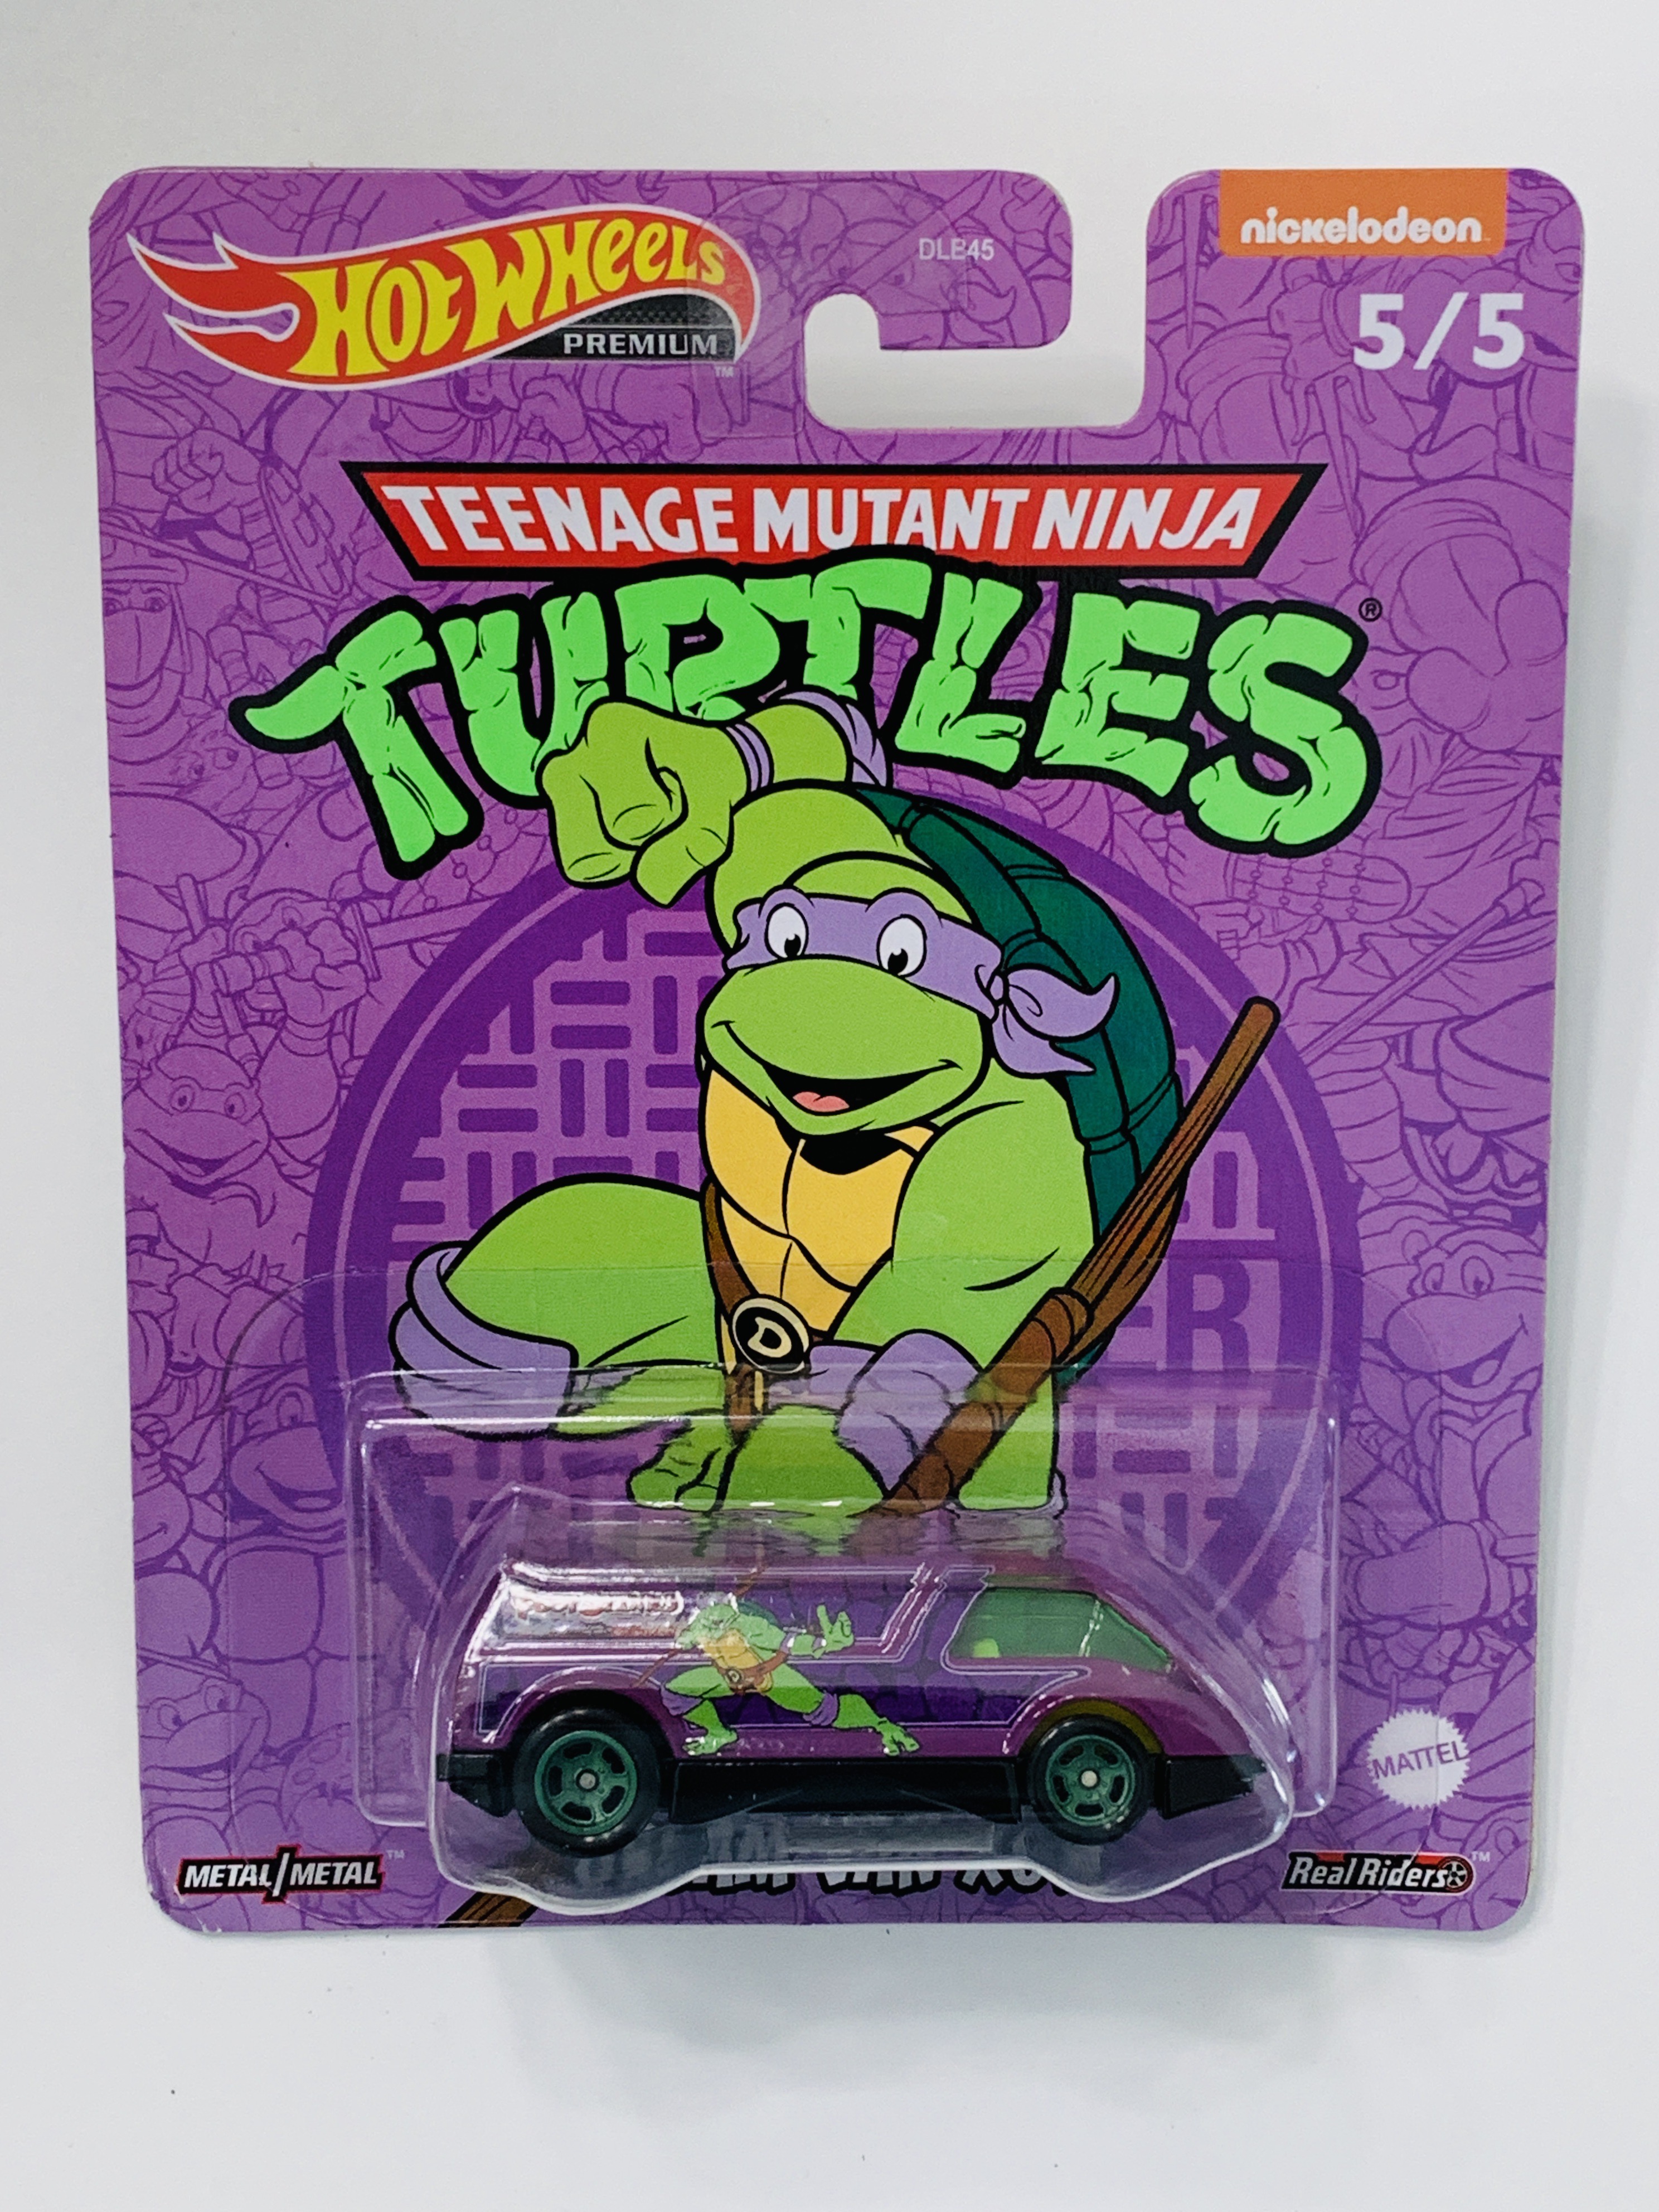 Hot Wheels Premium Teenage Mutant Ninja Turtles Dream Van XGW